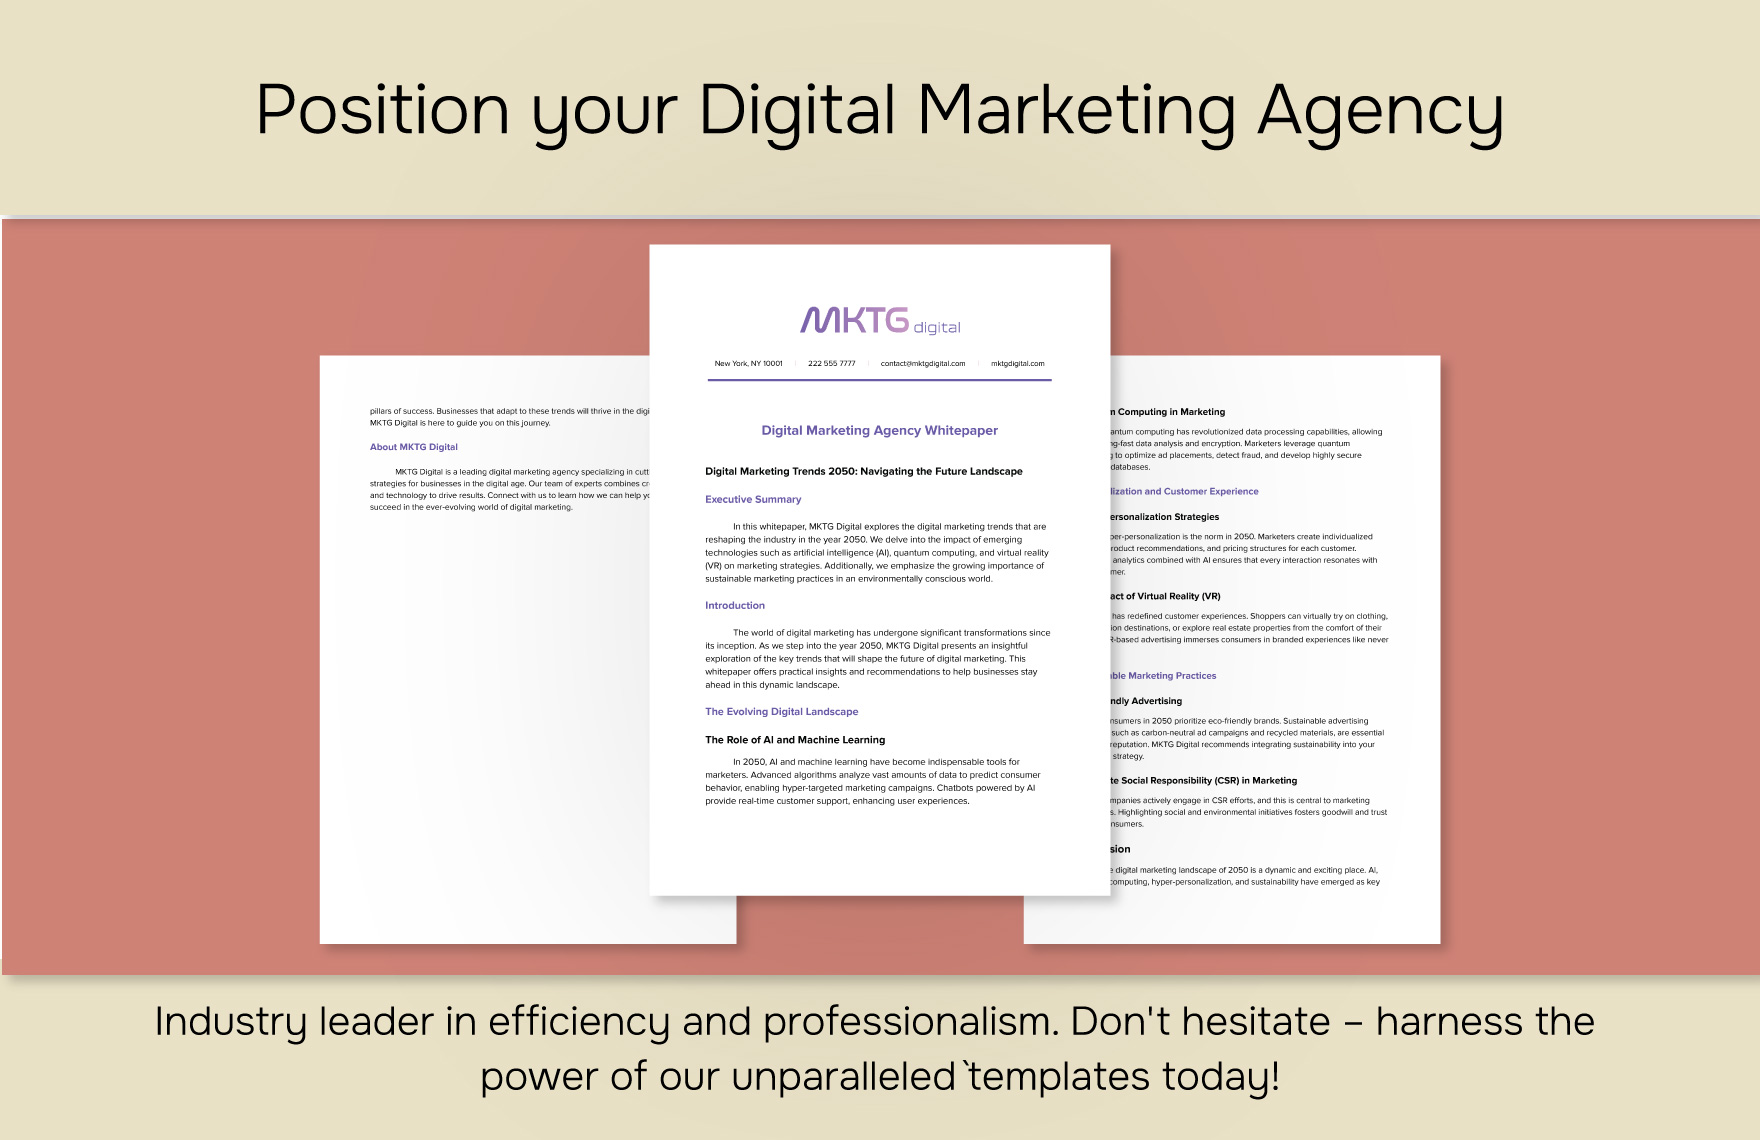 Digital Marketing Agency Whitepaper Template